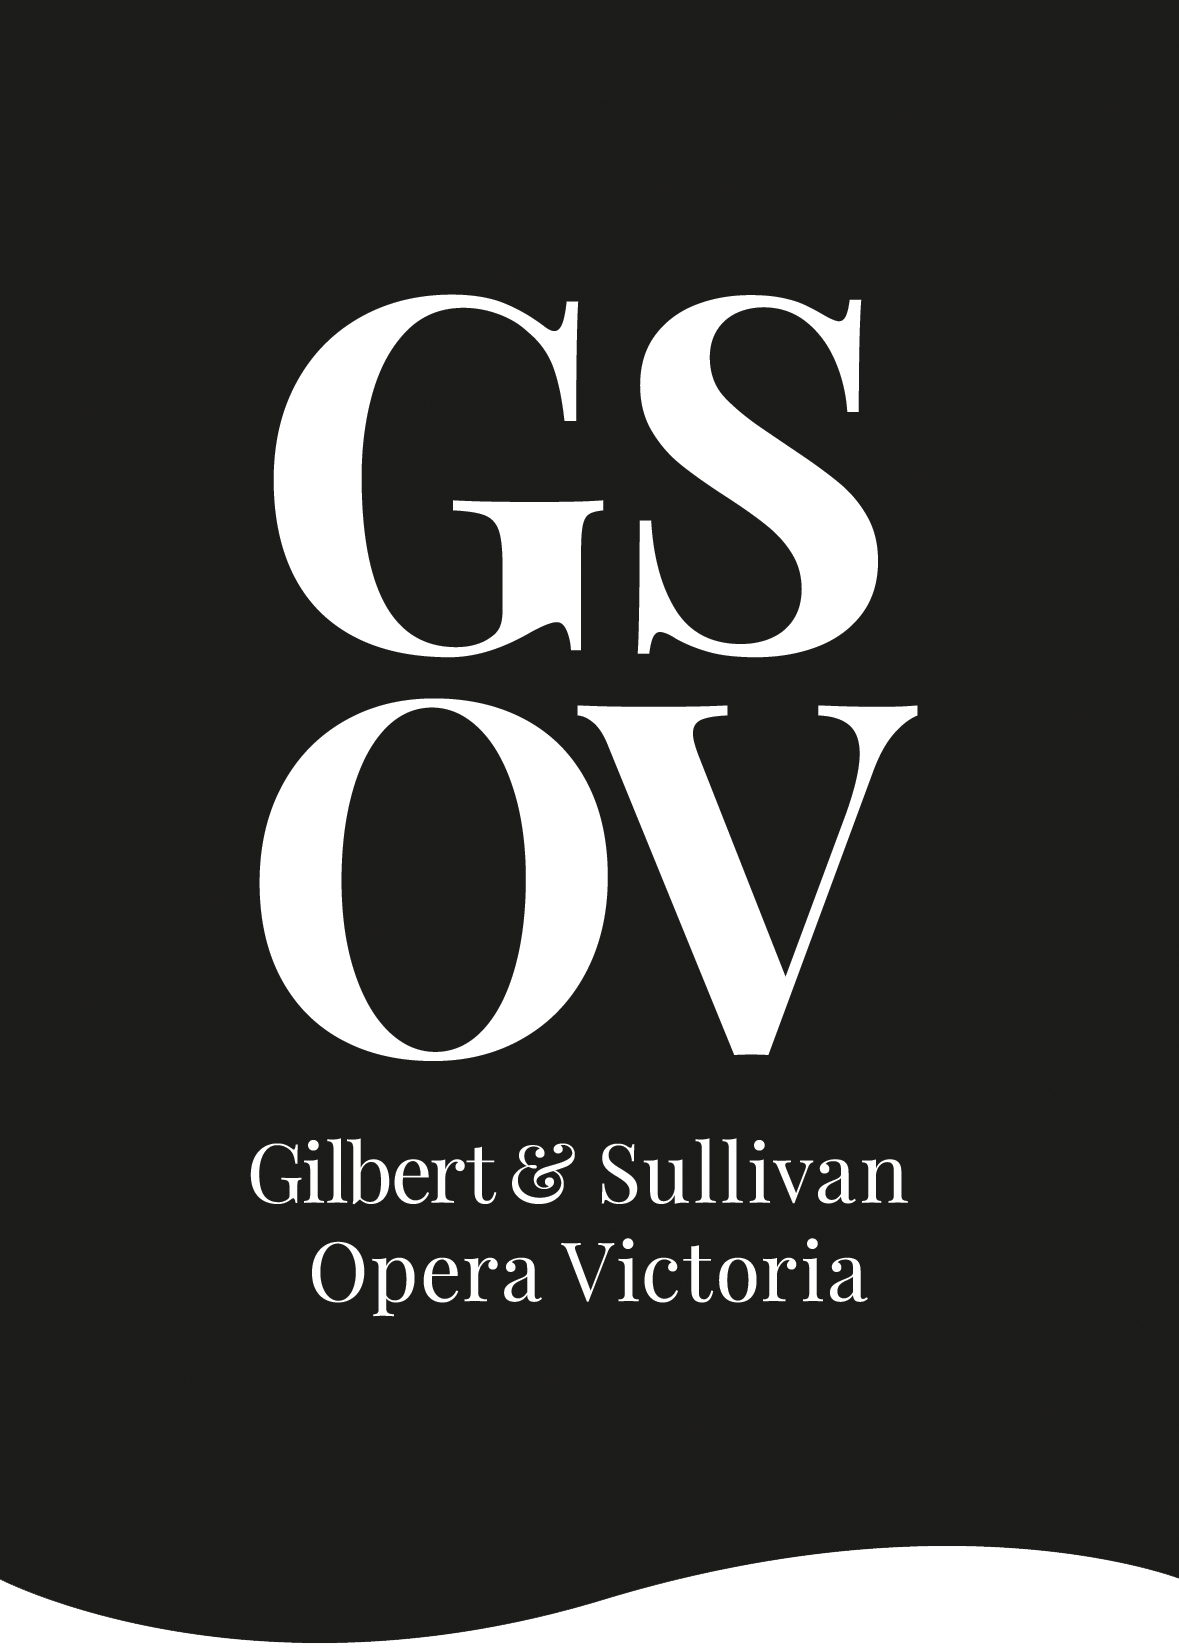 GSOV logo